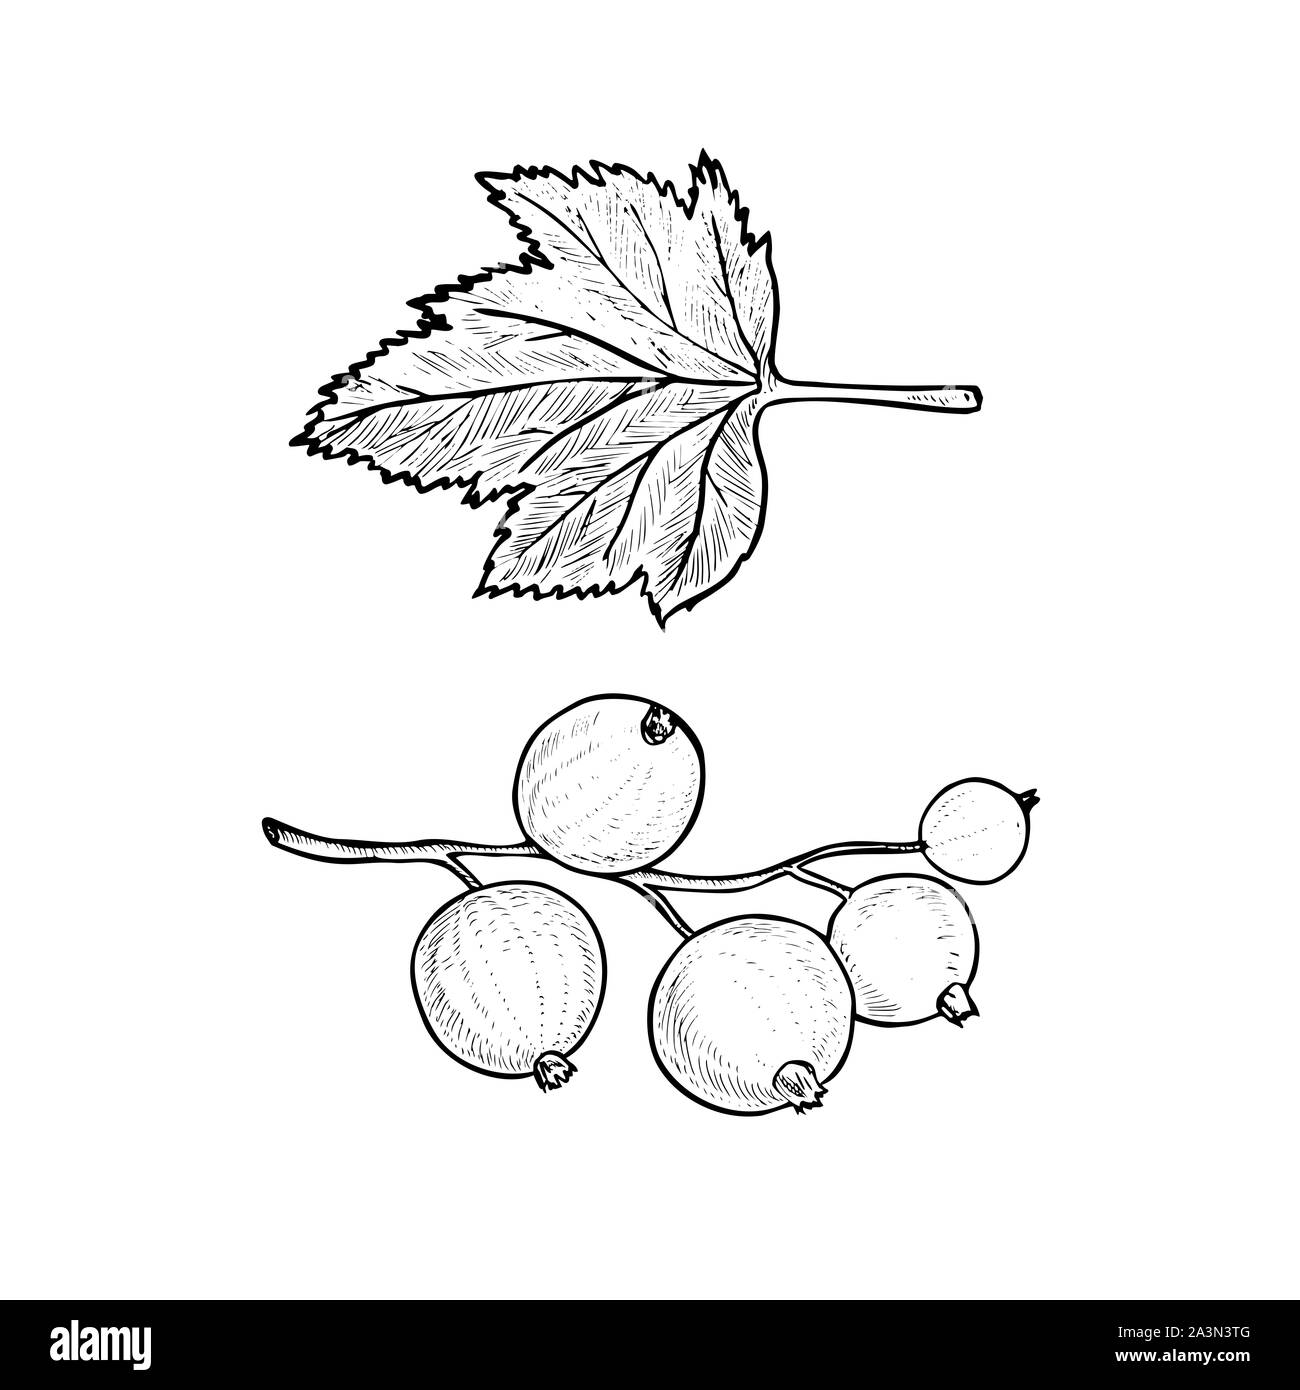 Blackcurrant or black currant (Ribes nigrum) and leaf, doodle gravure style sketch illustration, element for design Stock Photo